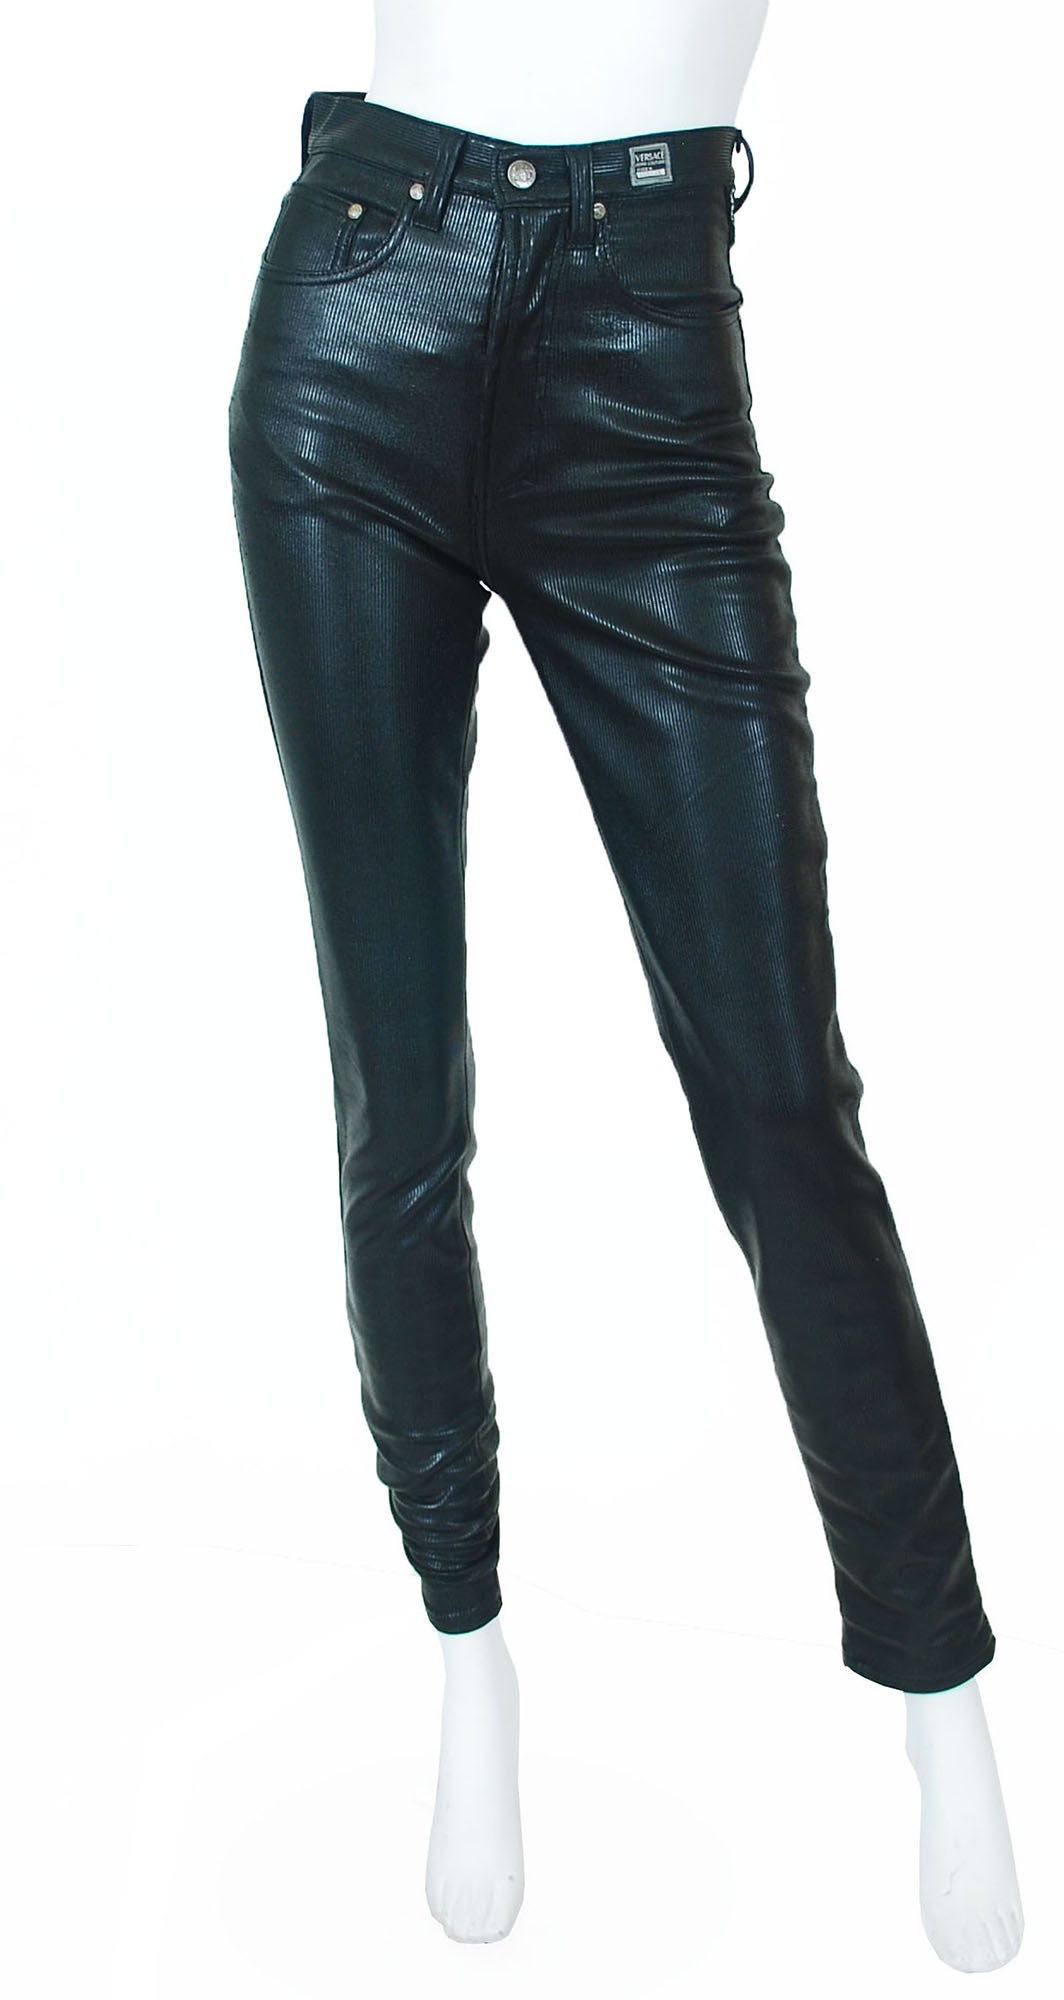 Jeans Couture Black Shiny Disco Pants